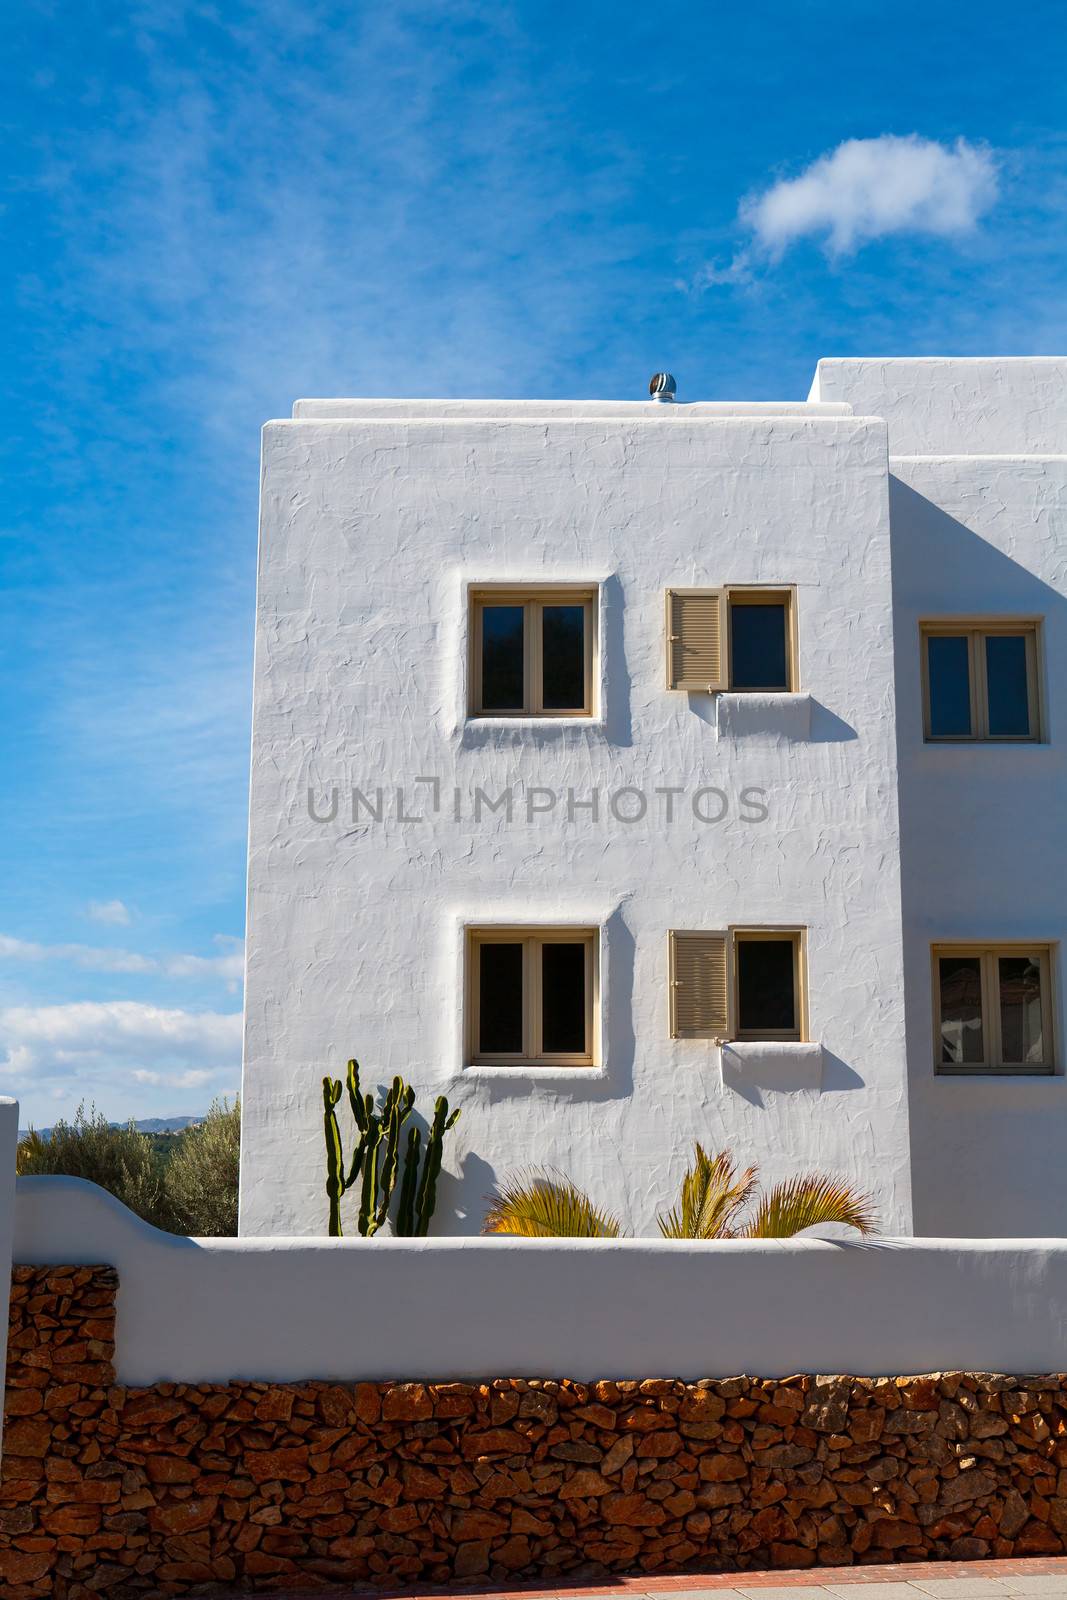 White Mediterranean houses in Javea alicante at spain